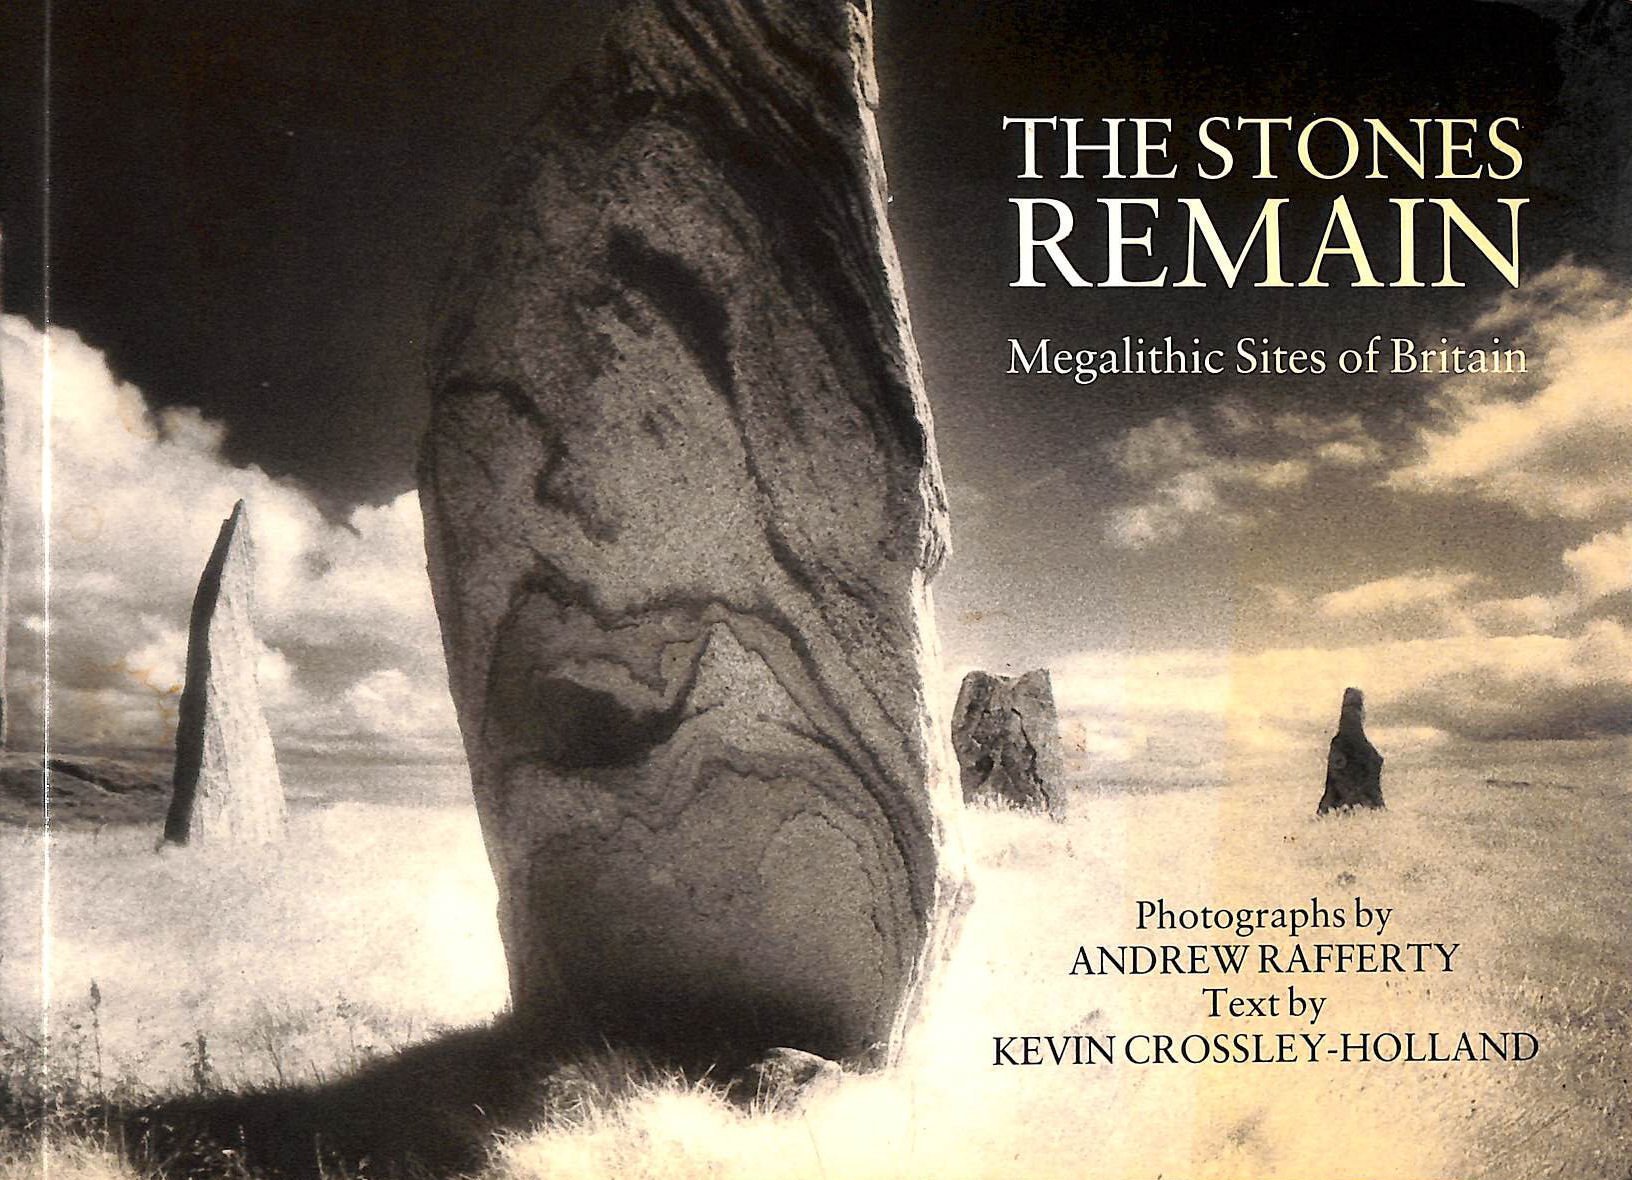 RAFFERTY, ANDREW; CROSSLEY-HOLLAND, KEVIN; RAFFERTY, ANDREW [ILLUSTRATOR] - The Stones Remain